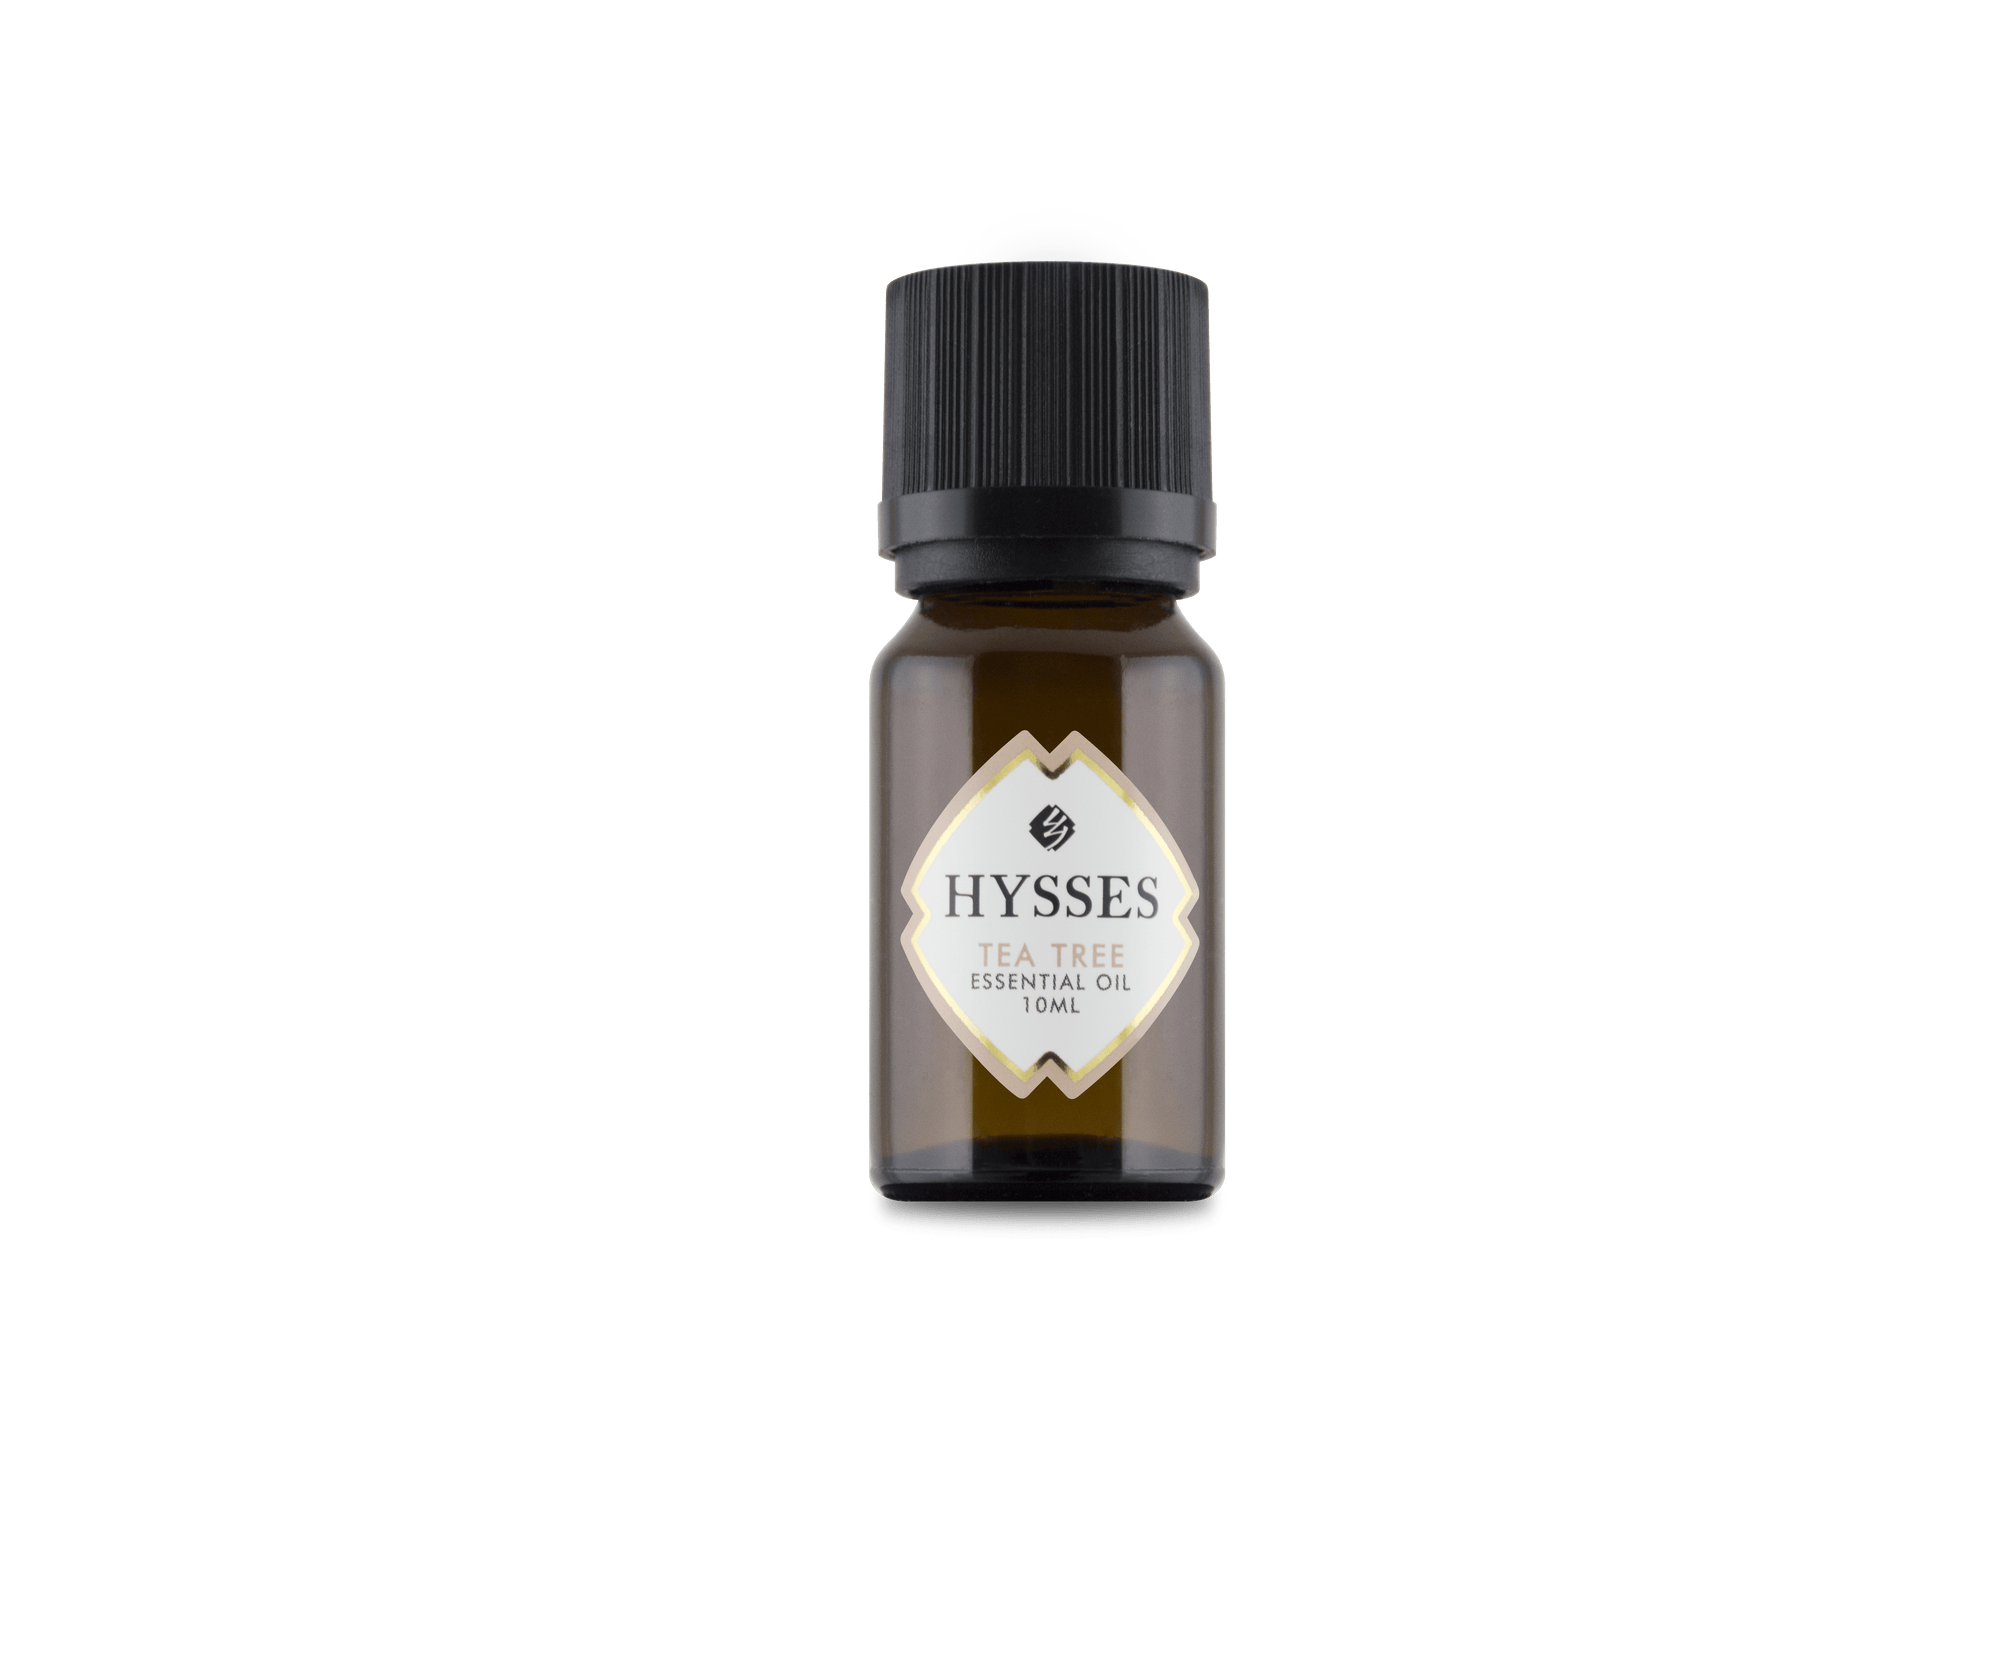 Hysses Essential Oil Essential Oil Tea Tree, 10ml